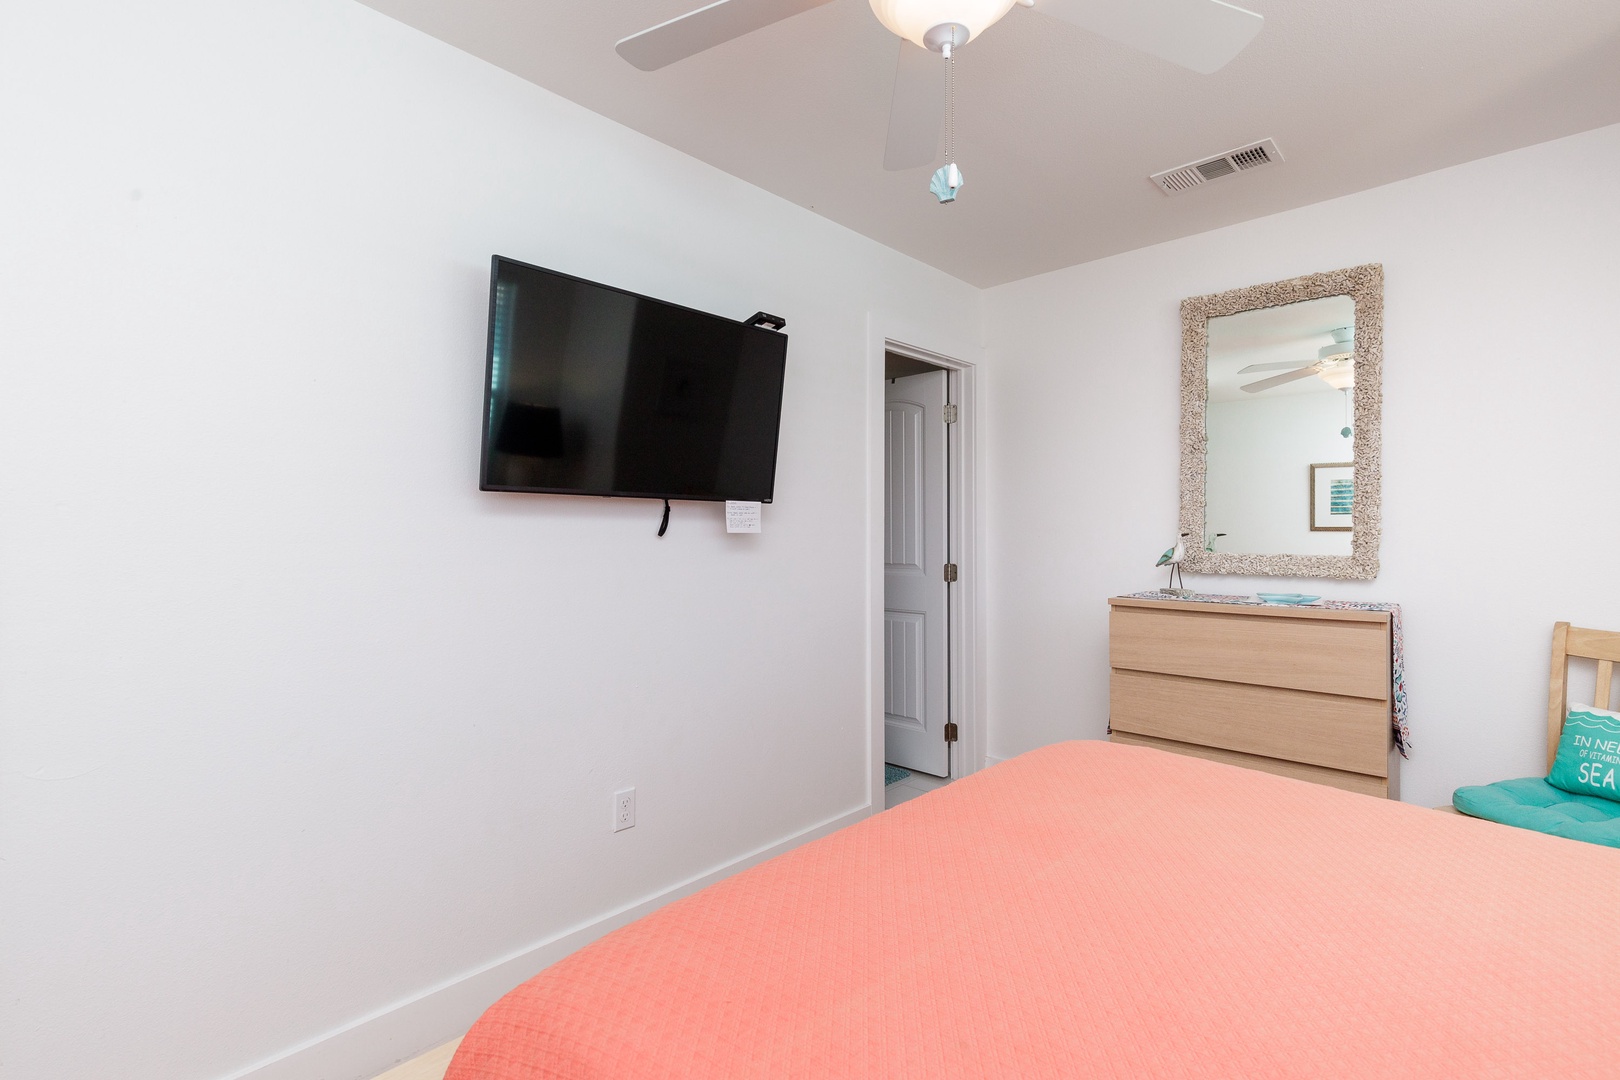 The 2nd floor queen suite offers a Smart TV, private en suite, & ceiling fan